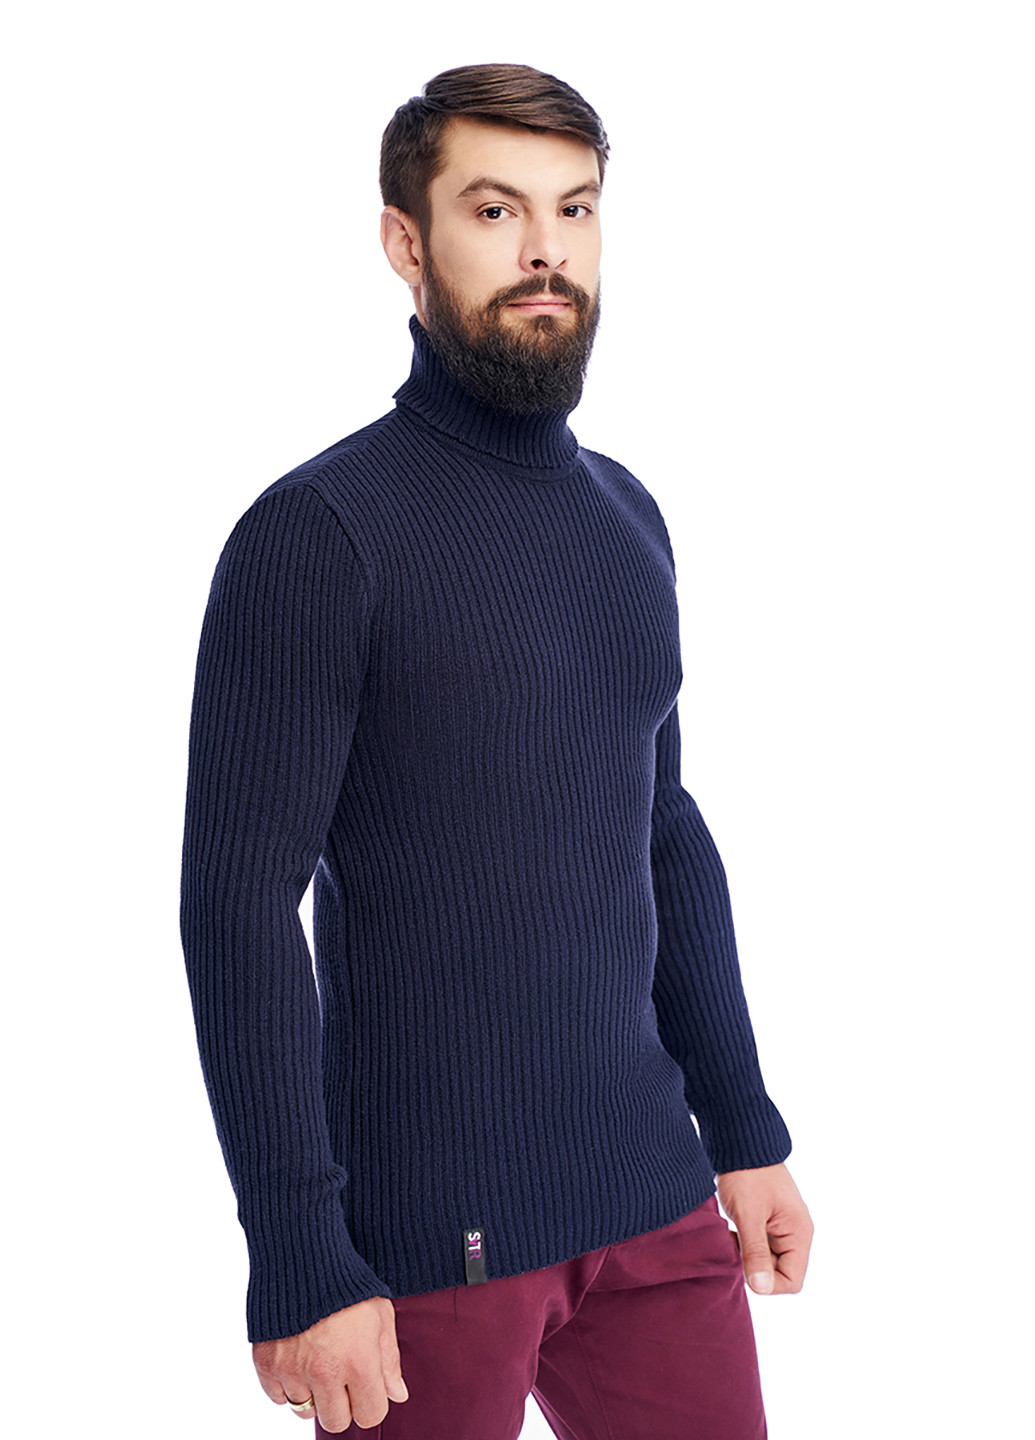 Темно-синий демисезонный свитер SVTR